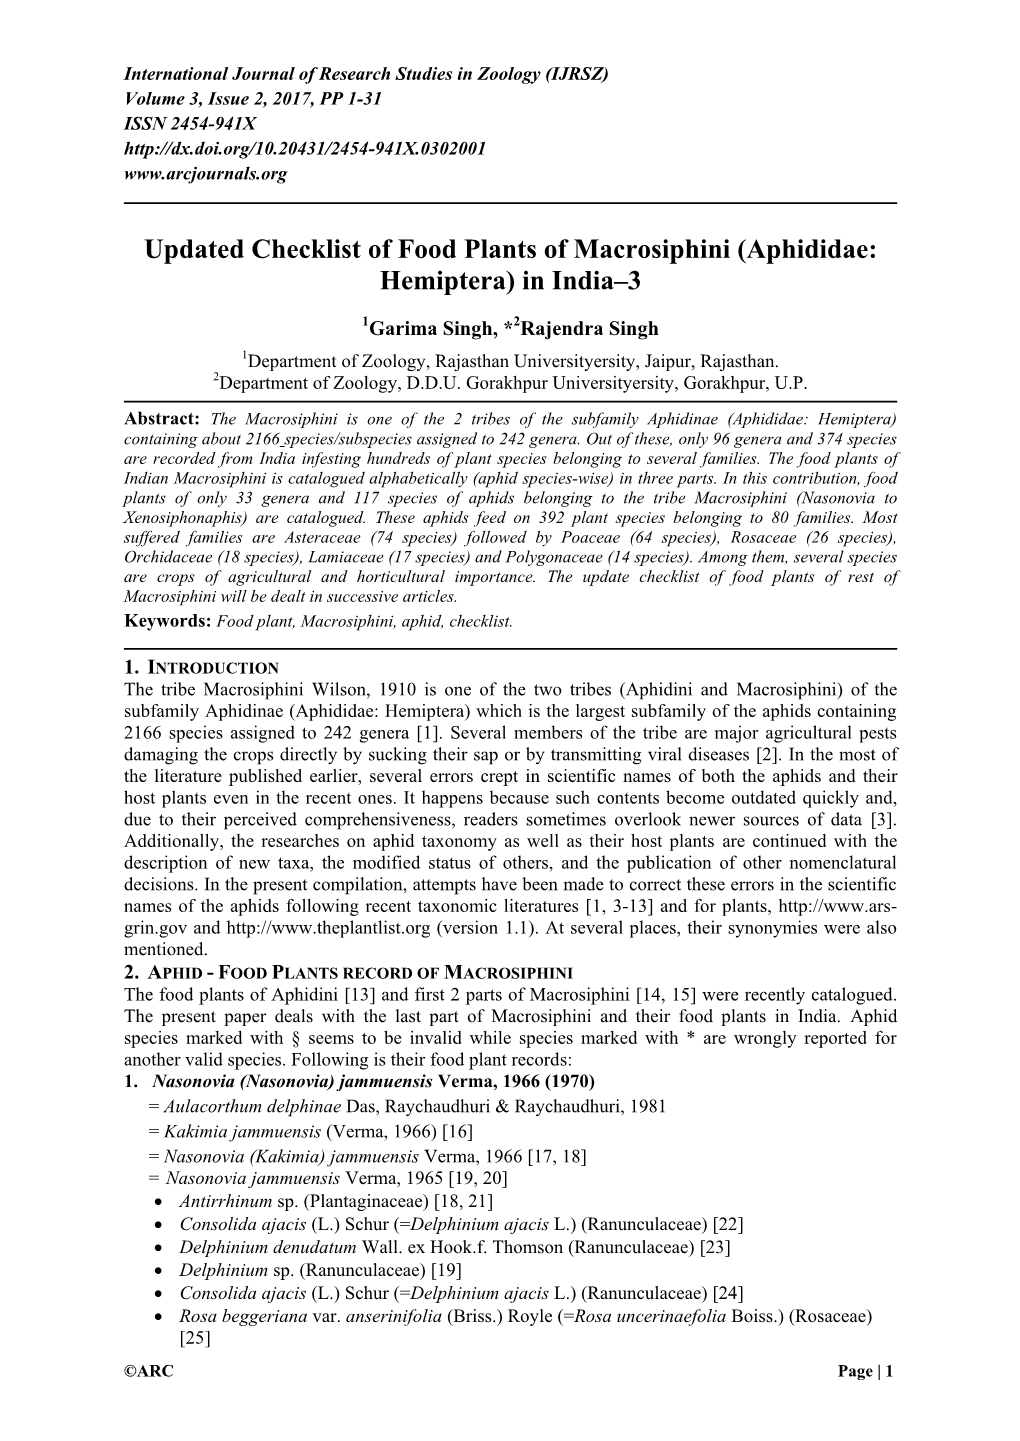 Updated Checklist of Food Plants of Macrosiphini (Aphididae: Hemiptera) in India–3